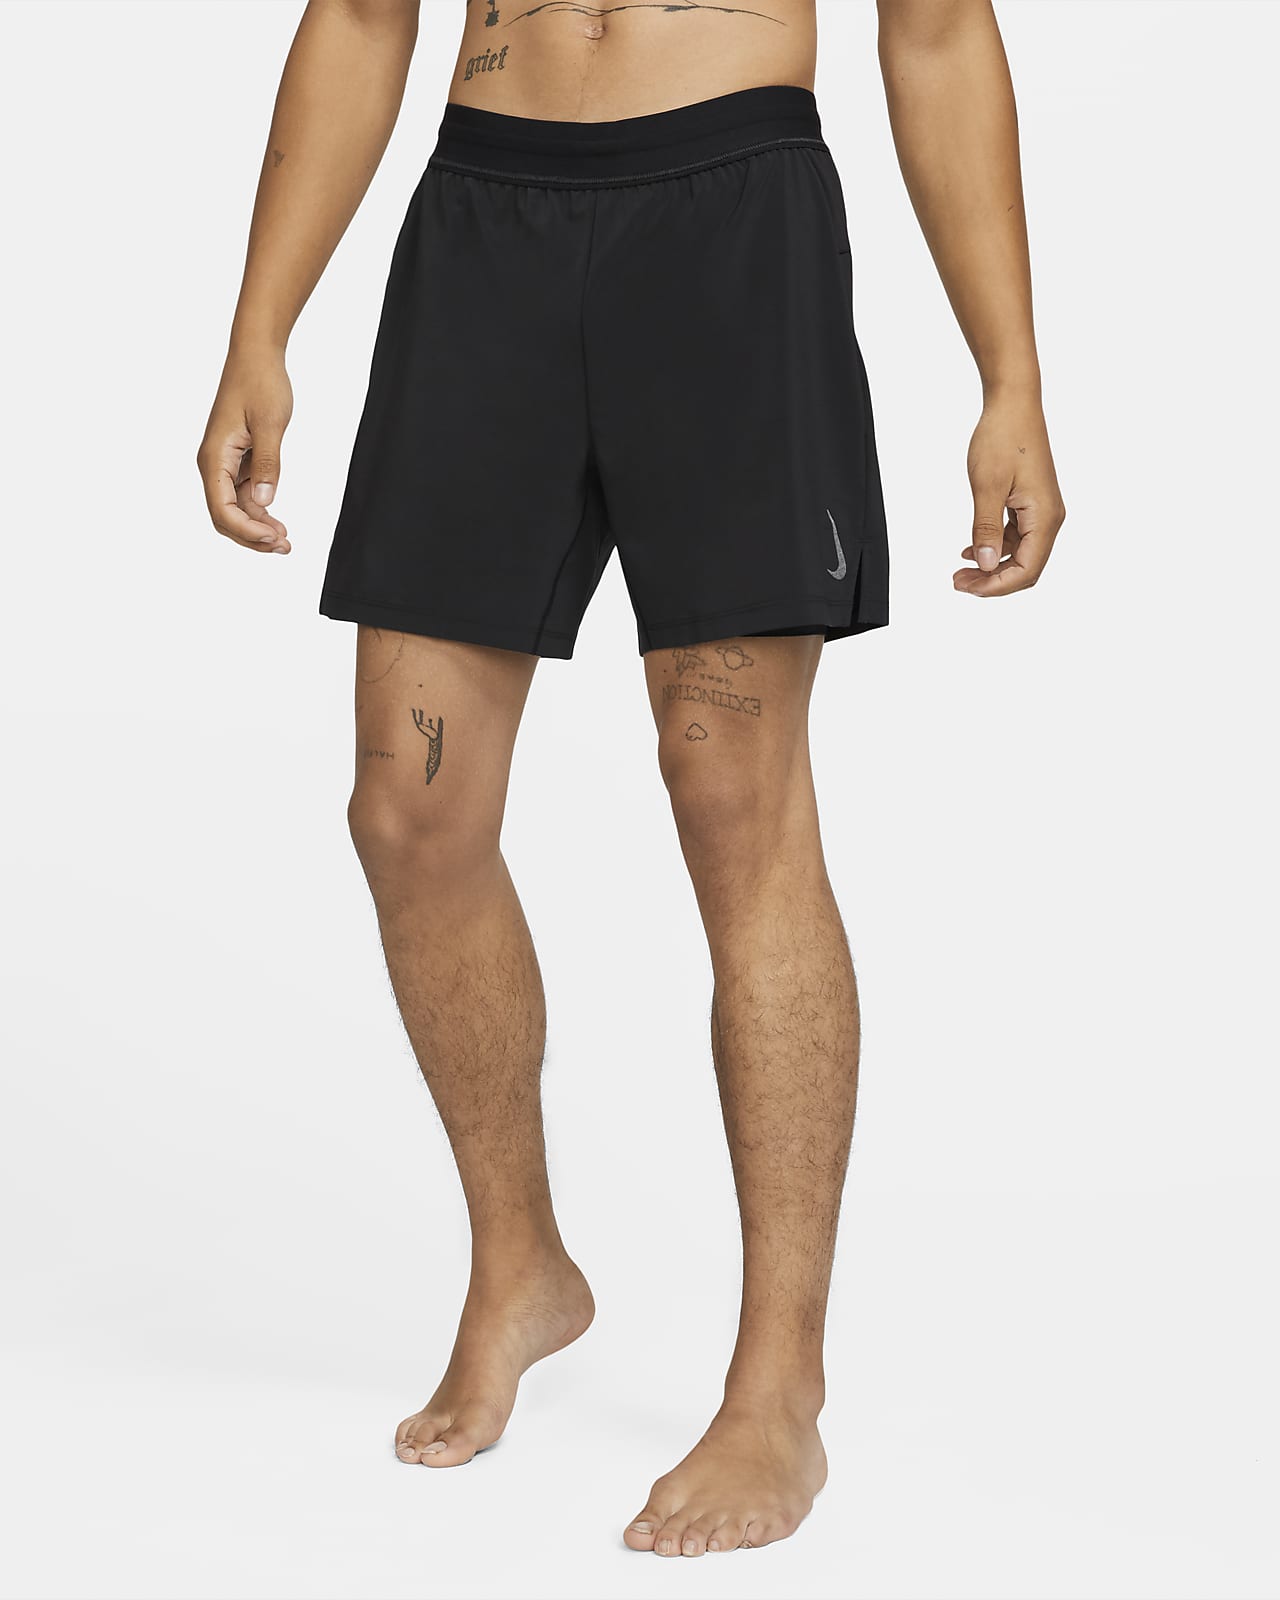 Мужские шорты 2 в 1 Nike Yoga. Nike RU